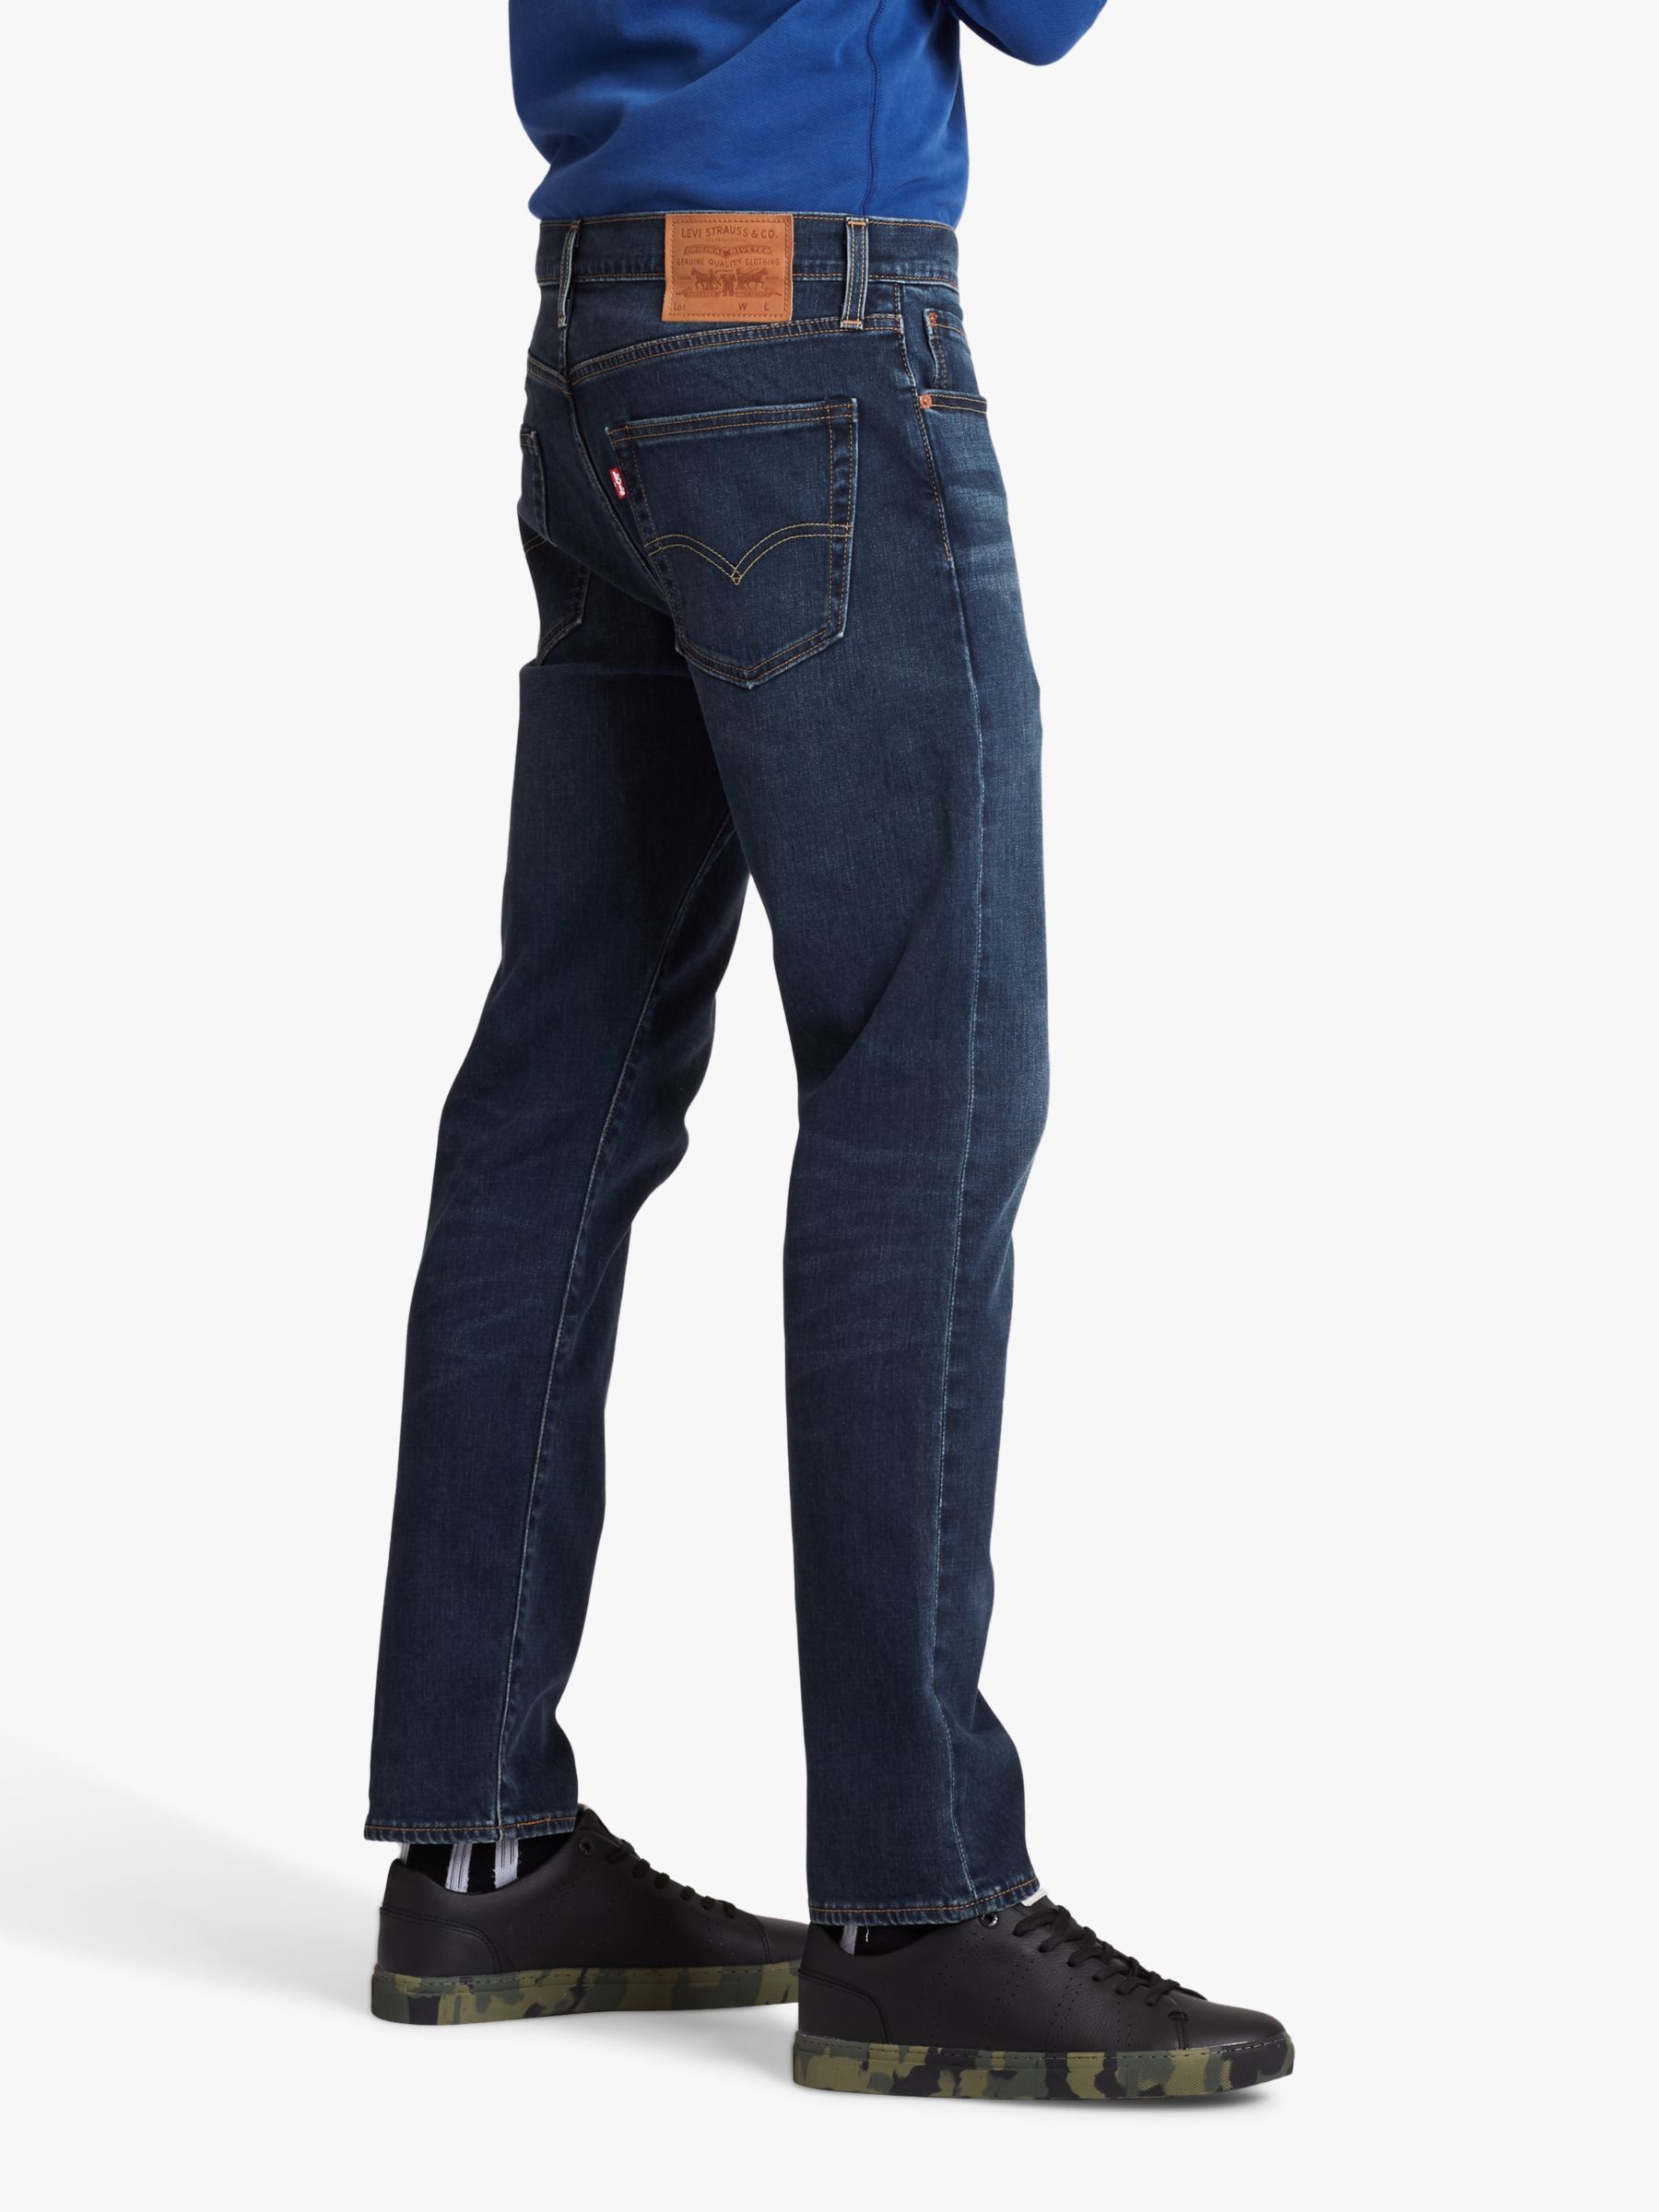 Levi's 502 Regular Tapered Jeans, Adriatic Adapt at John Lewis & Partners